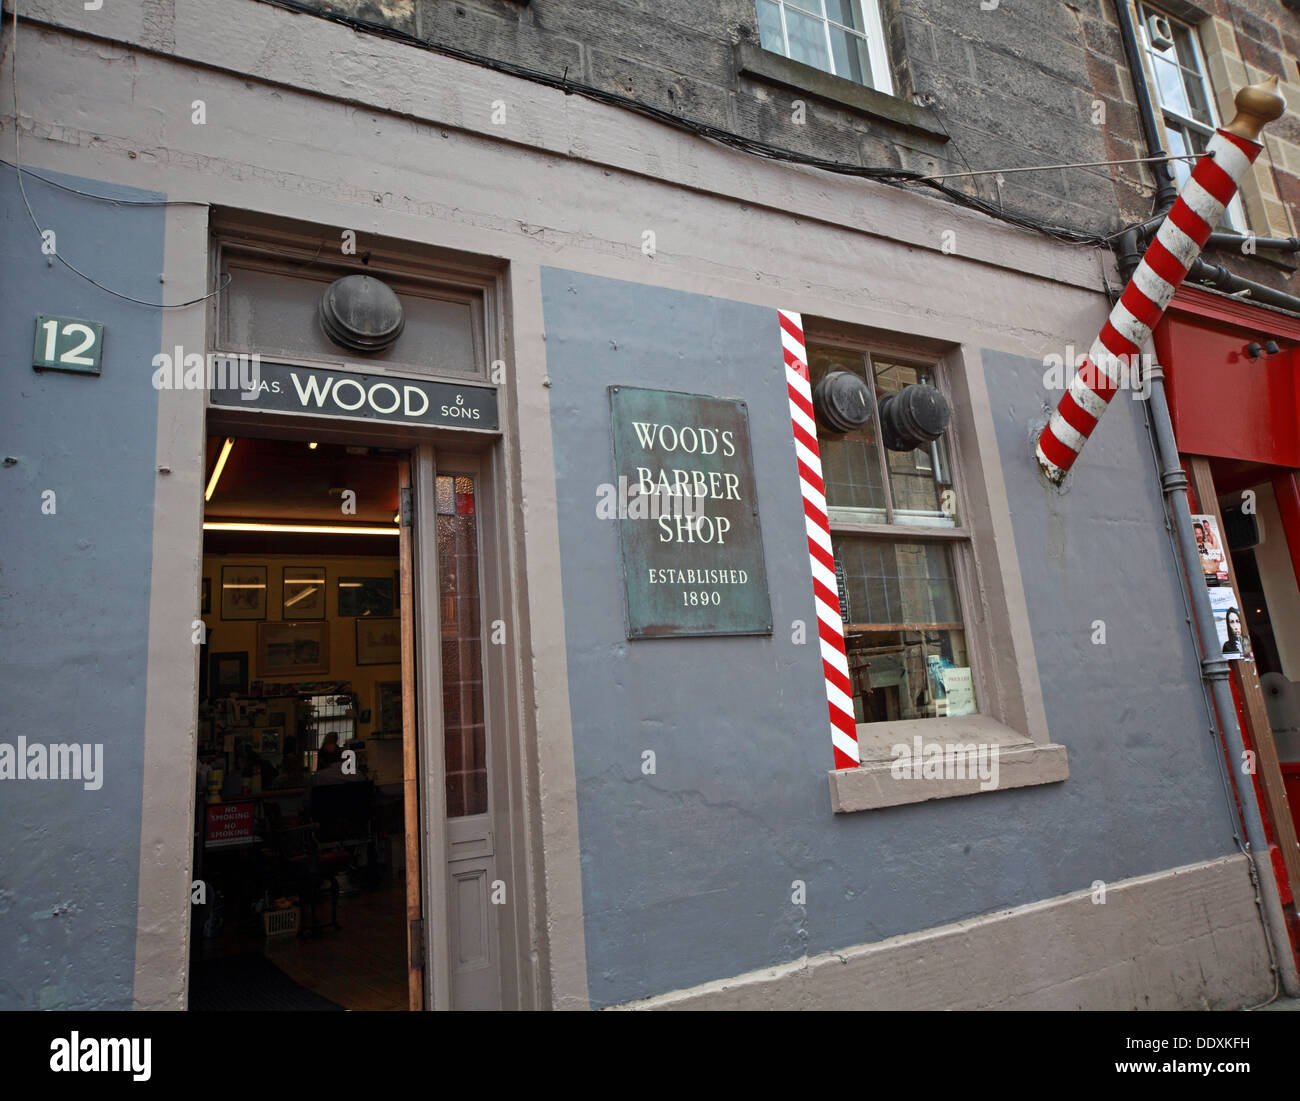 Barbiere tradizionali fondato nel 1890, Woods Barber Shop, 12 Drummond St, Edimburgo EH8 9TU Foto Stock